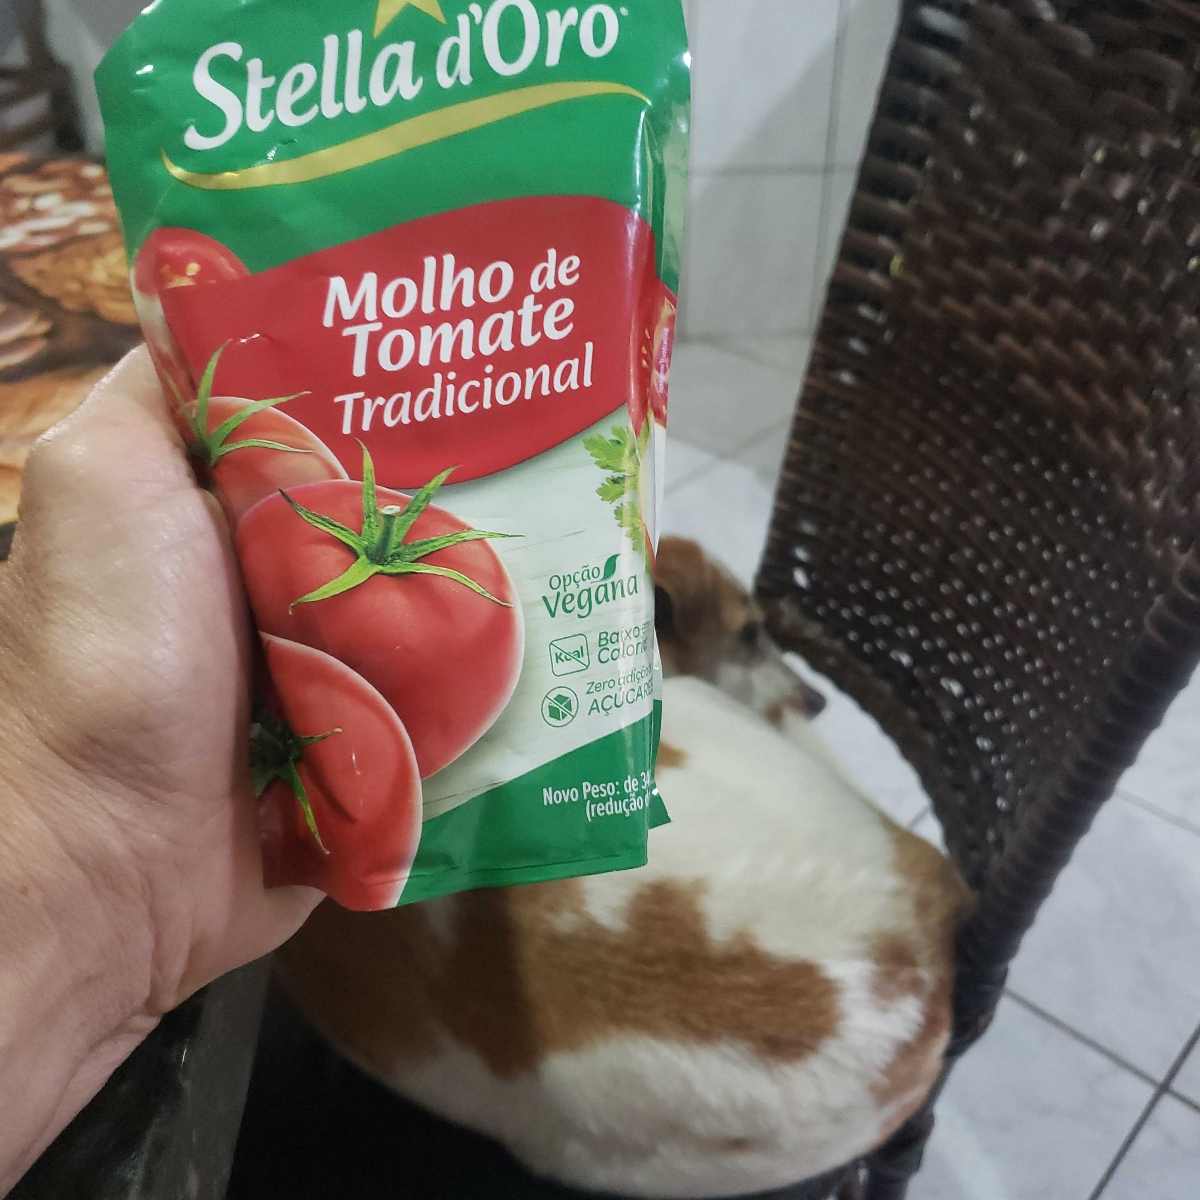 Stella d'oro Molho De Tomate Reviews | abillion